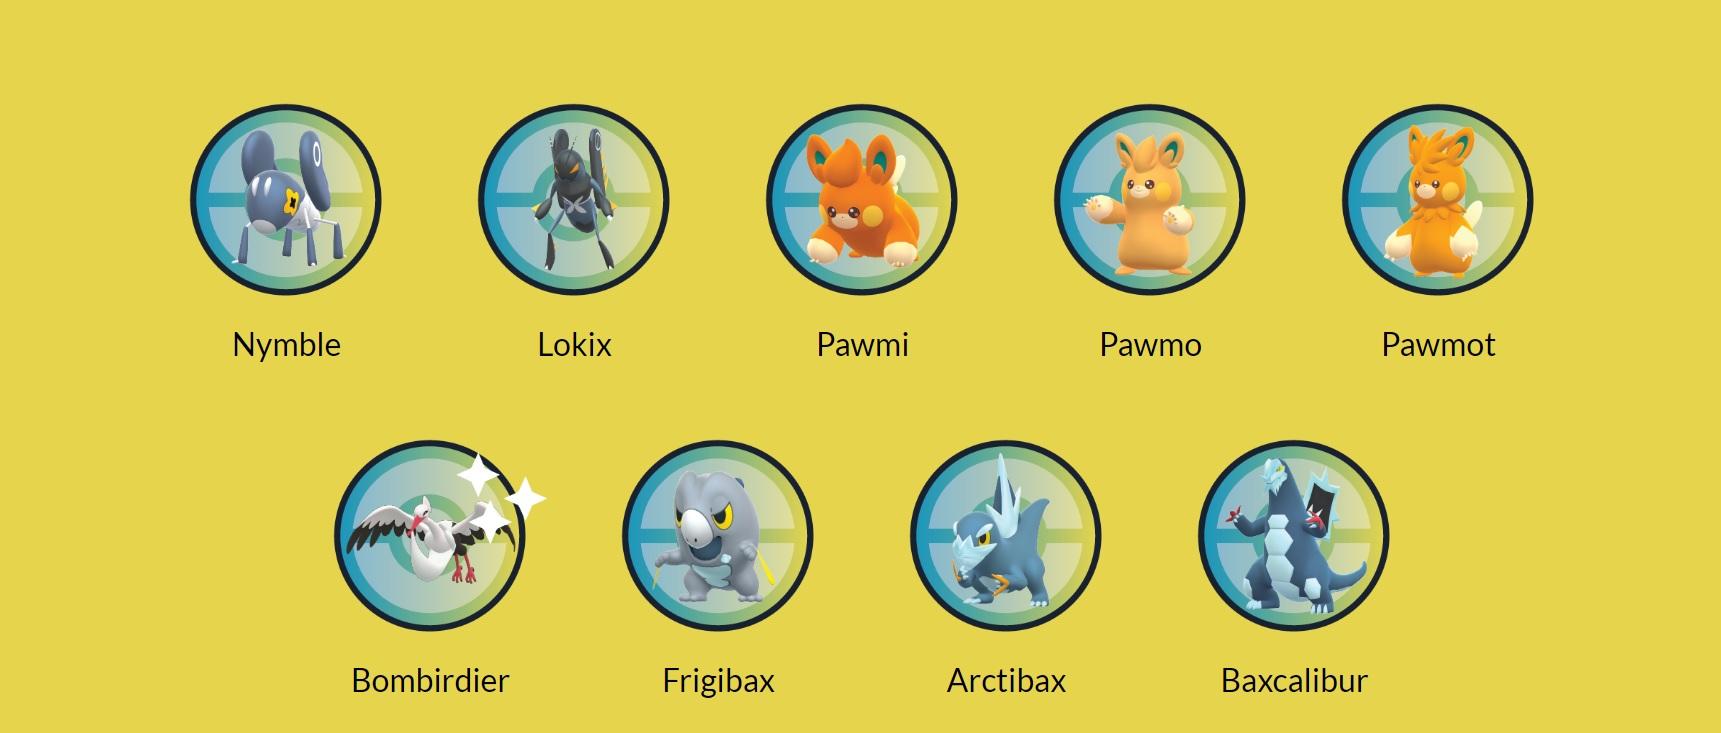 Pokémon GO で入手可能な第 IX 世代のポケモンのリスト（ポーミ、ポーモ、ポーモットなど）。